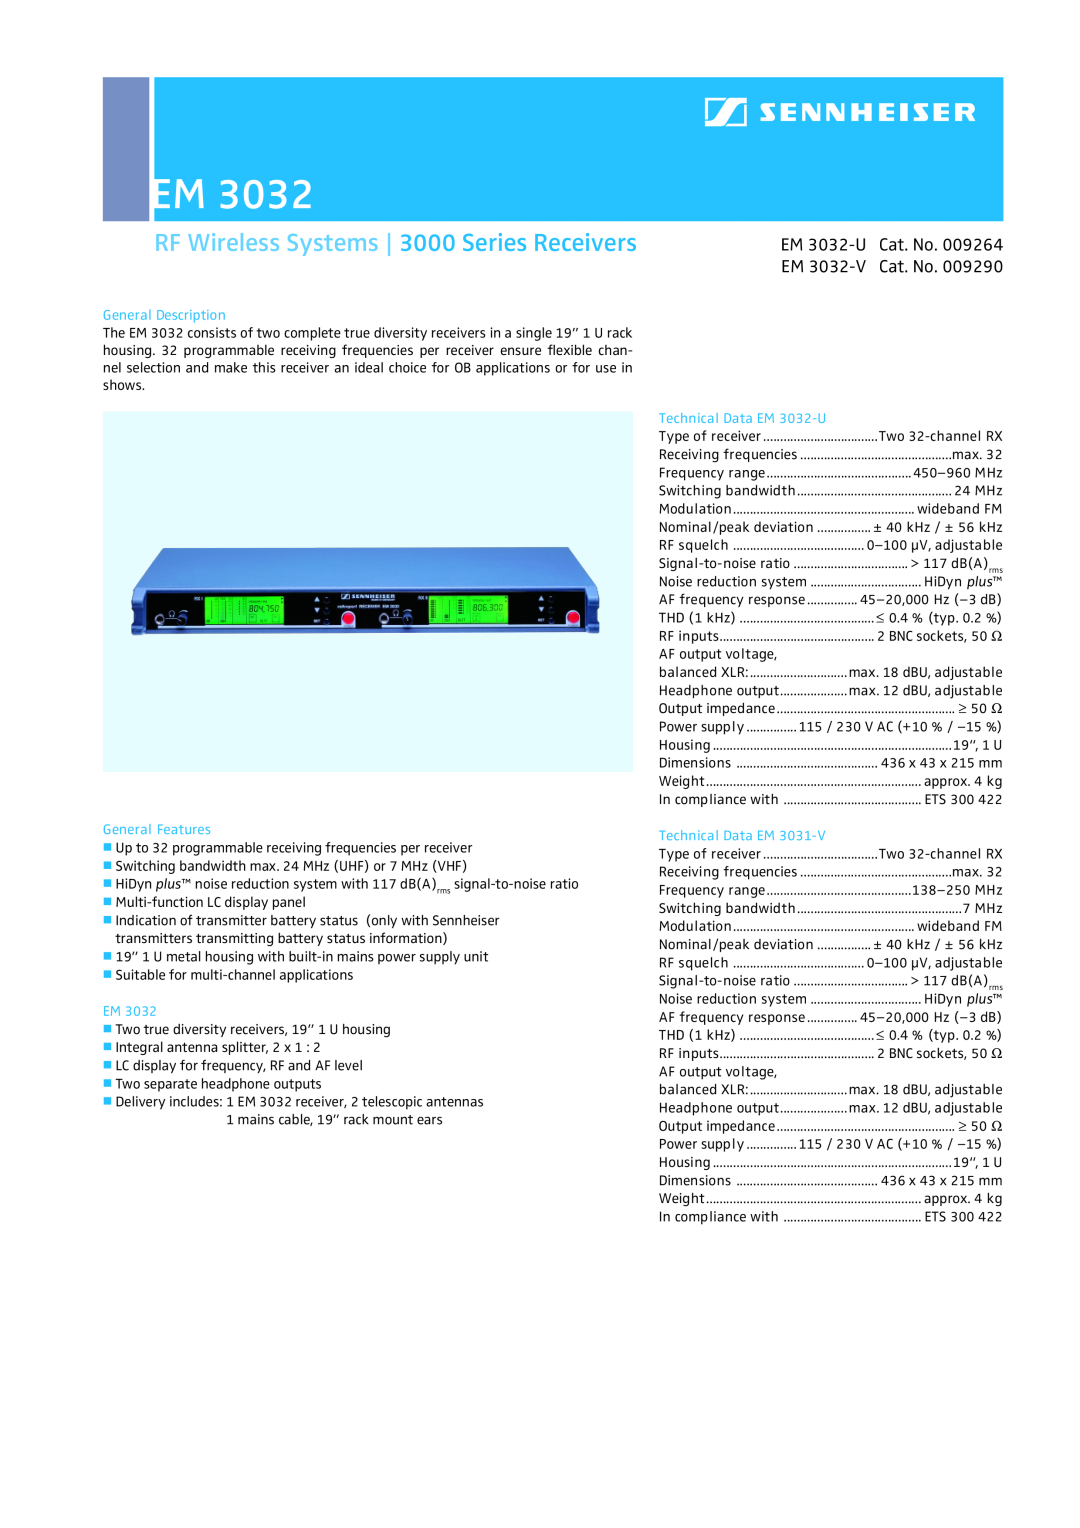 Sennheiser EM 3032-V dimensions General Description, General Features, Technical Data EM 3032-U 